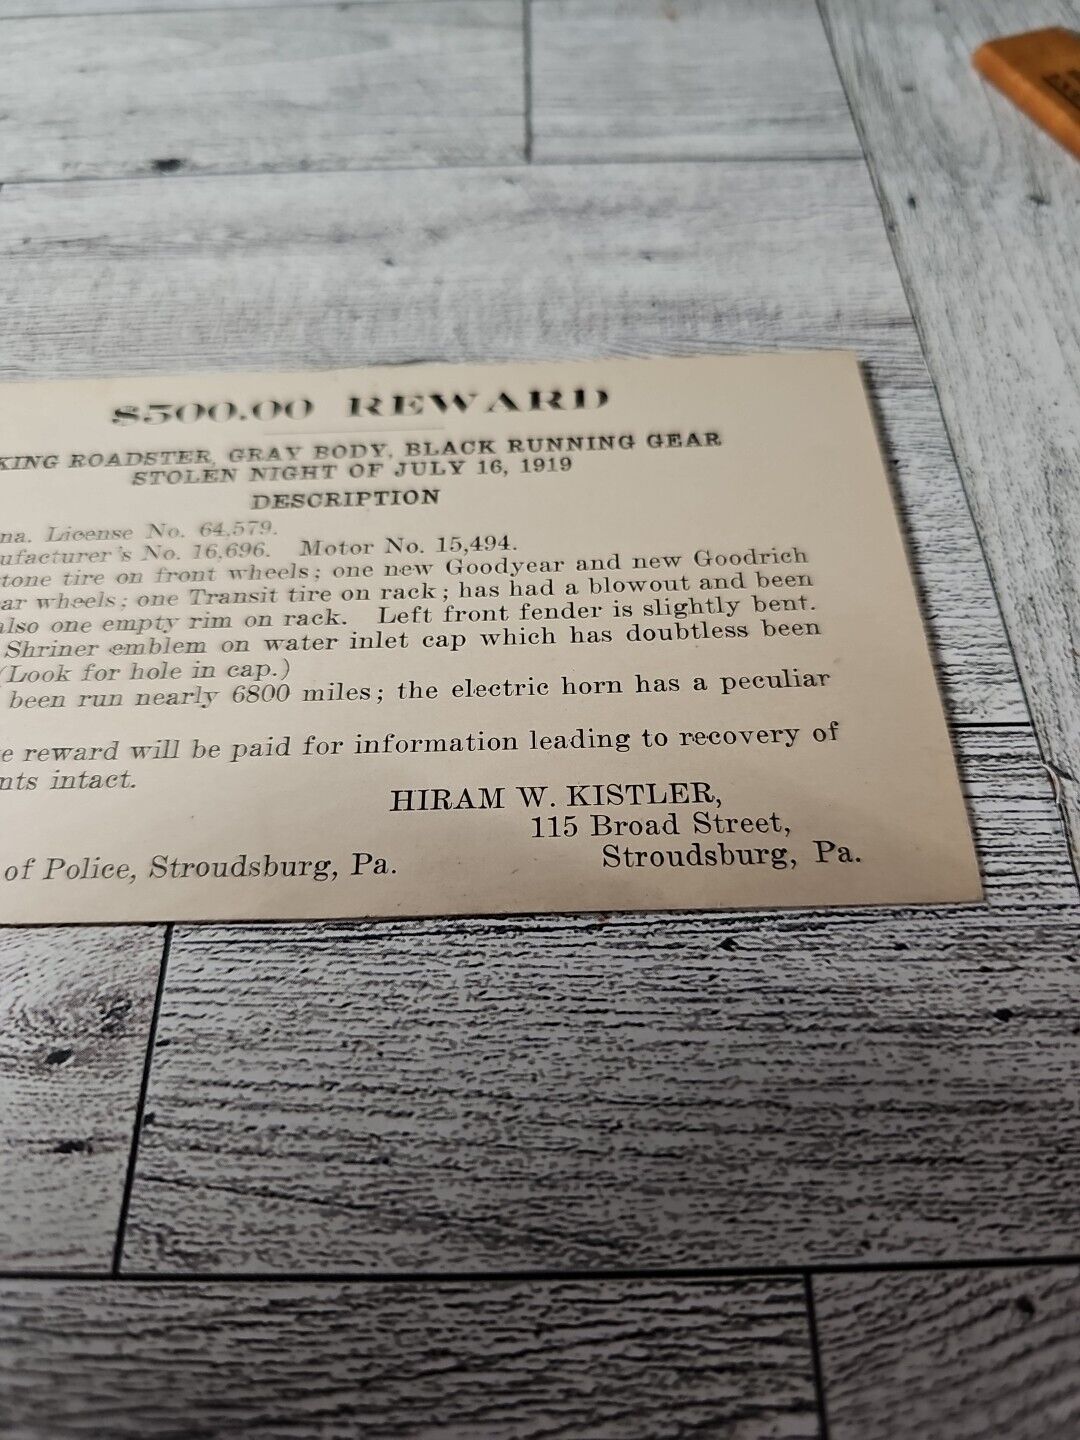 Antique Post Card Reward Stolen King Roadster 1919 Pennsylvania 